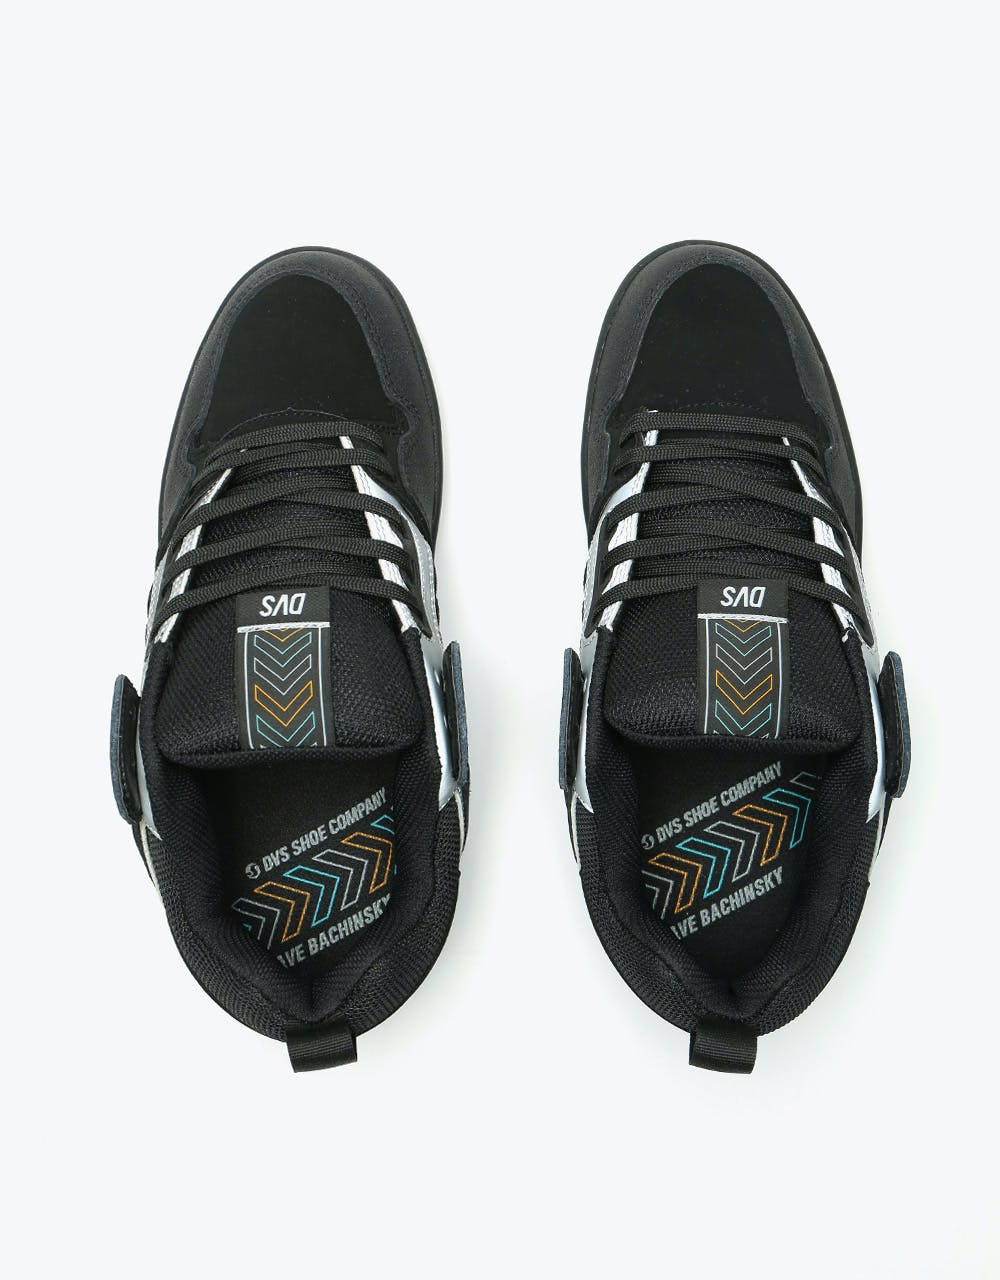 DVS Comanche 2.0 Skate Shoes - Black/Grey/Nubuck